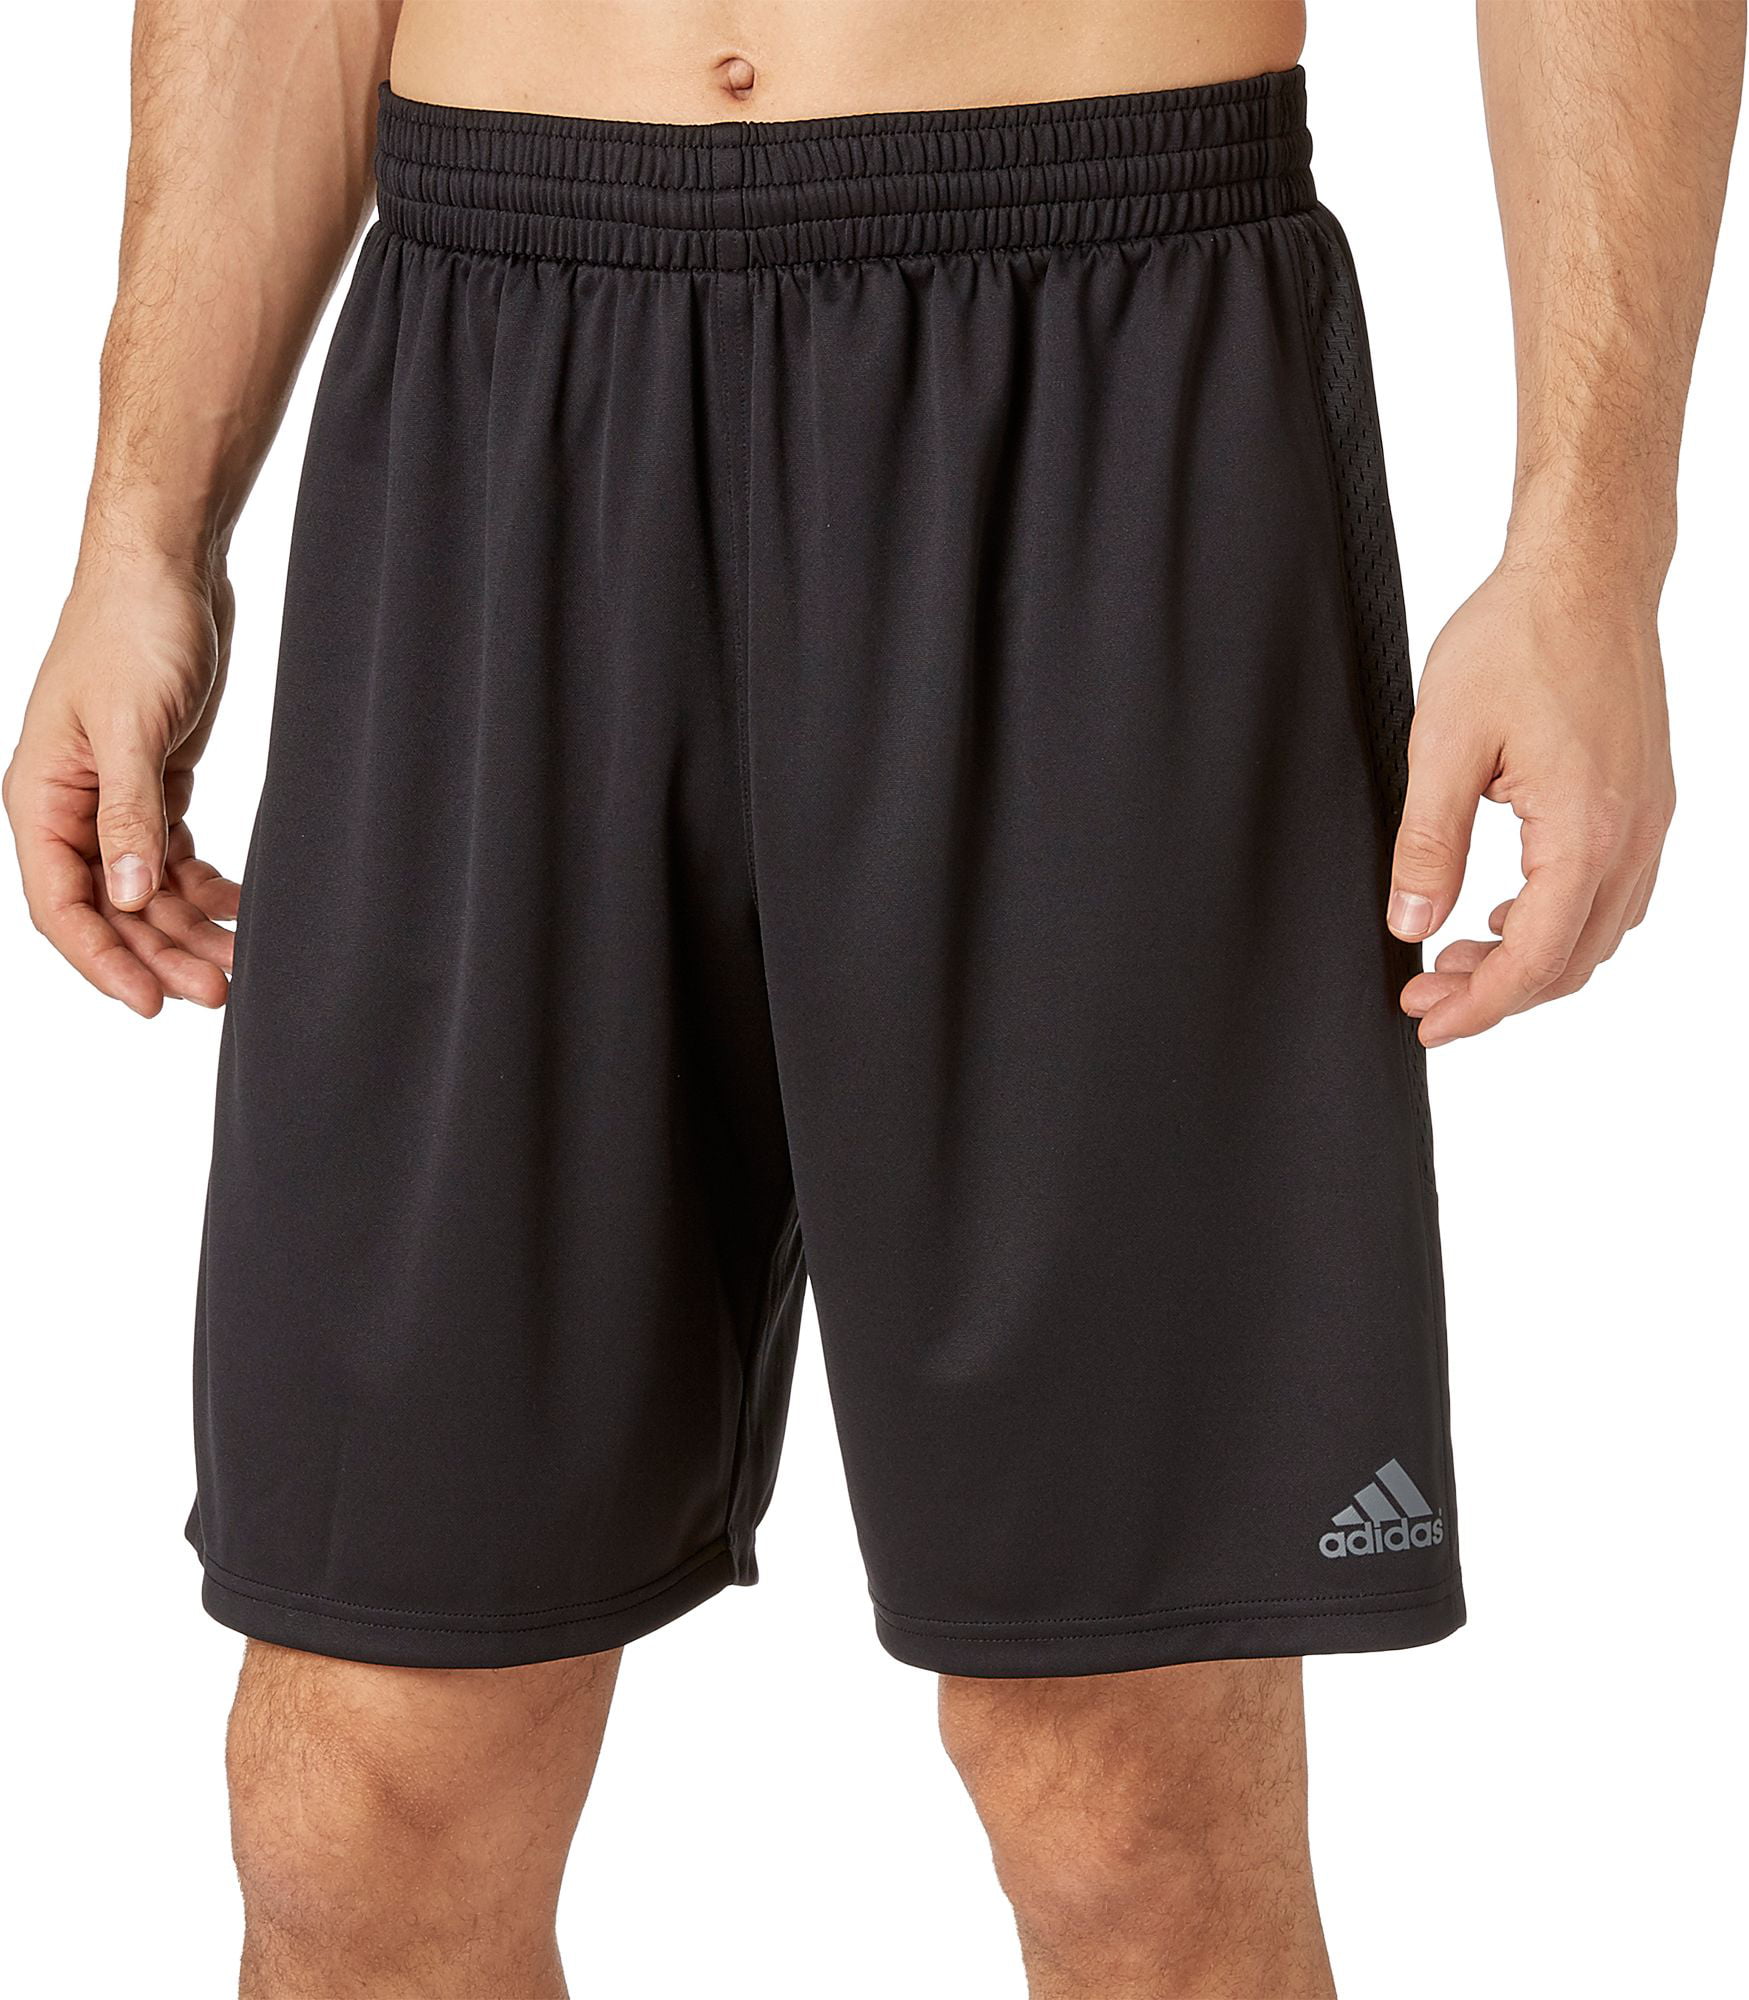 adidas flag football shorts